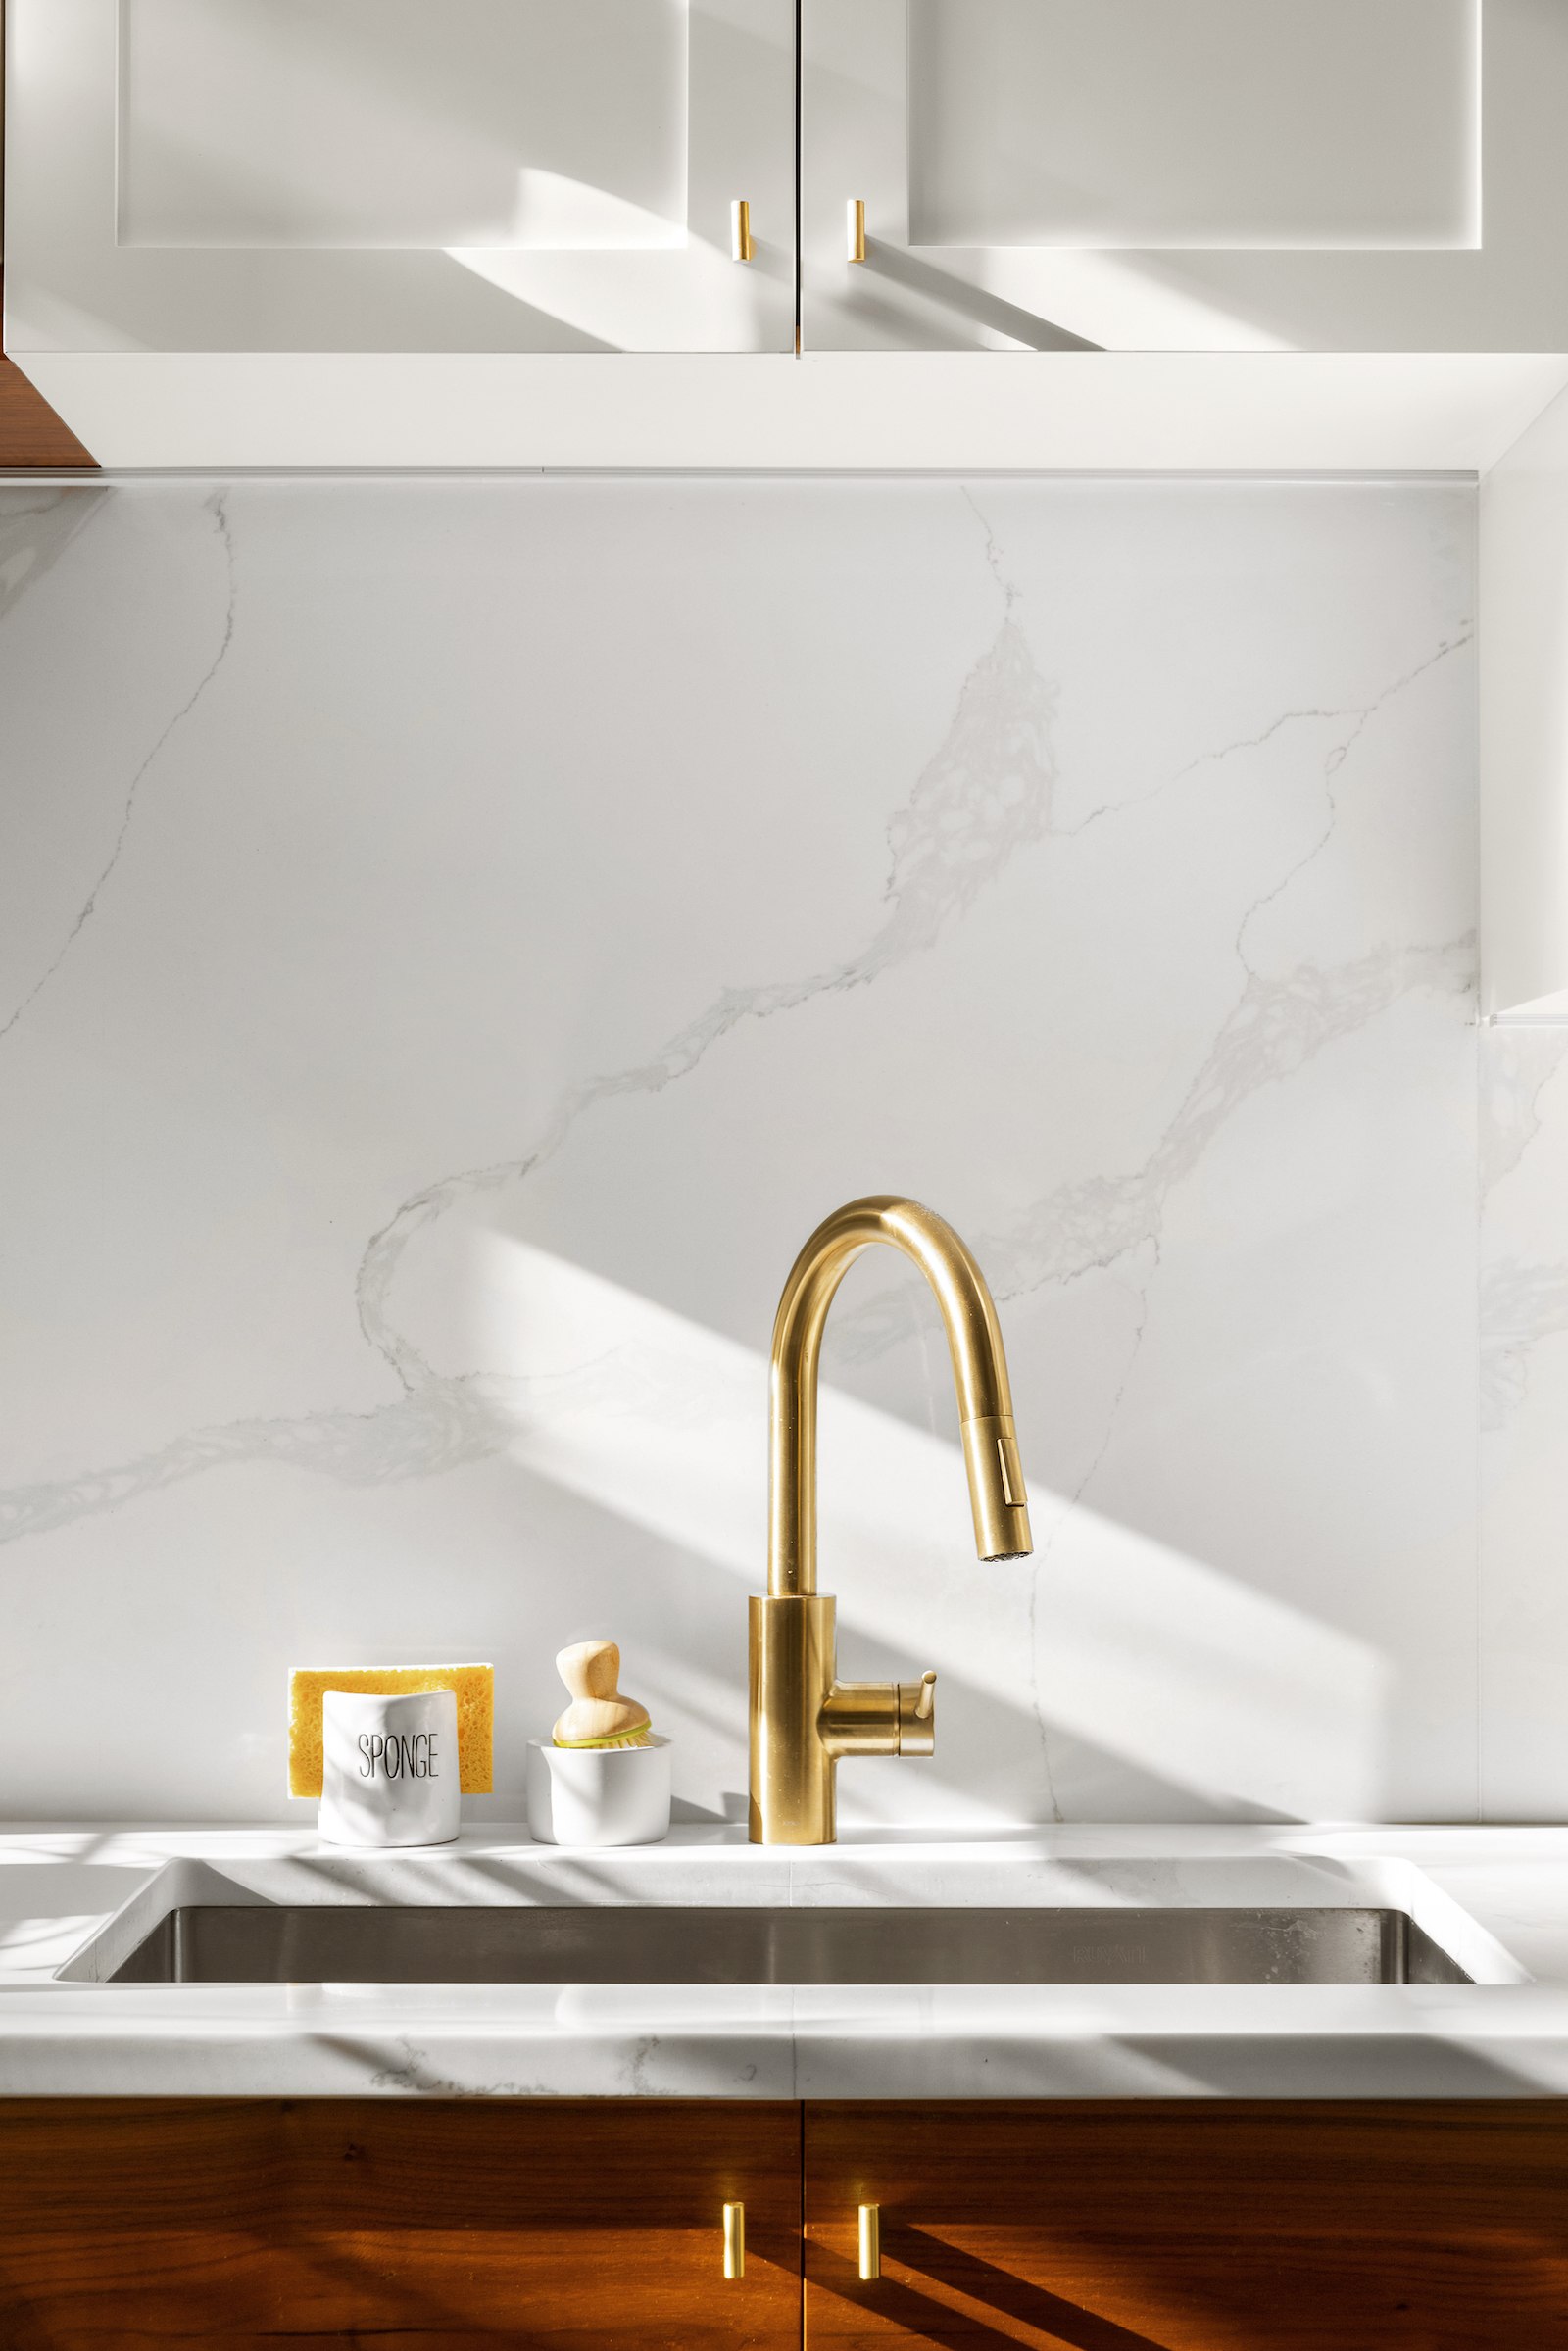 brooklyn kitchen remodel with gold faucet quartz backsplash and countertop bedford-stuyvesant